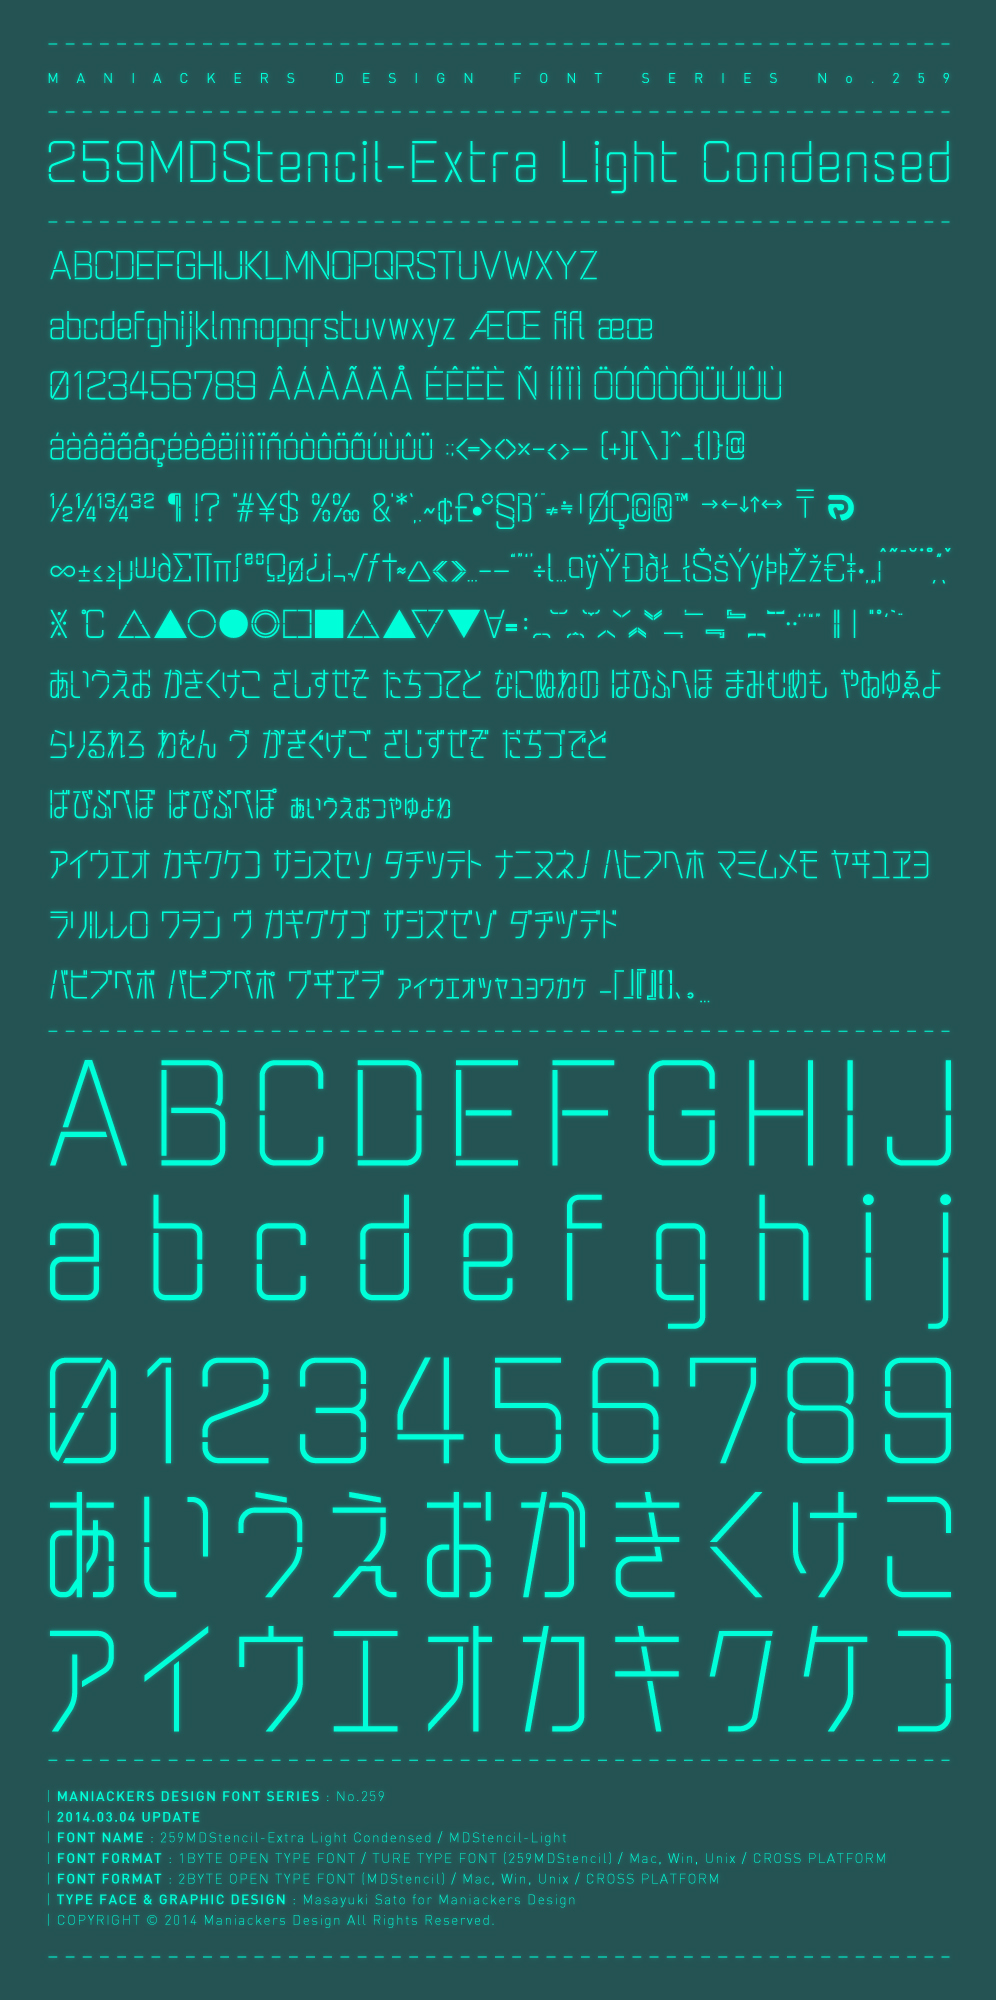 259mdstencil Extra Light Condensed Mdstencil Light 1byte 2byte Open Type Font Maniackers Design Design Font